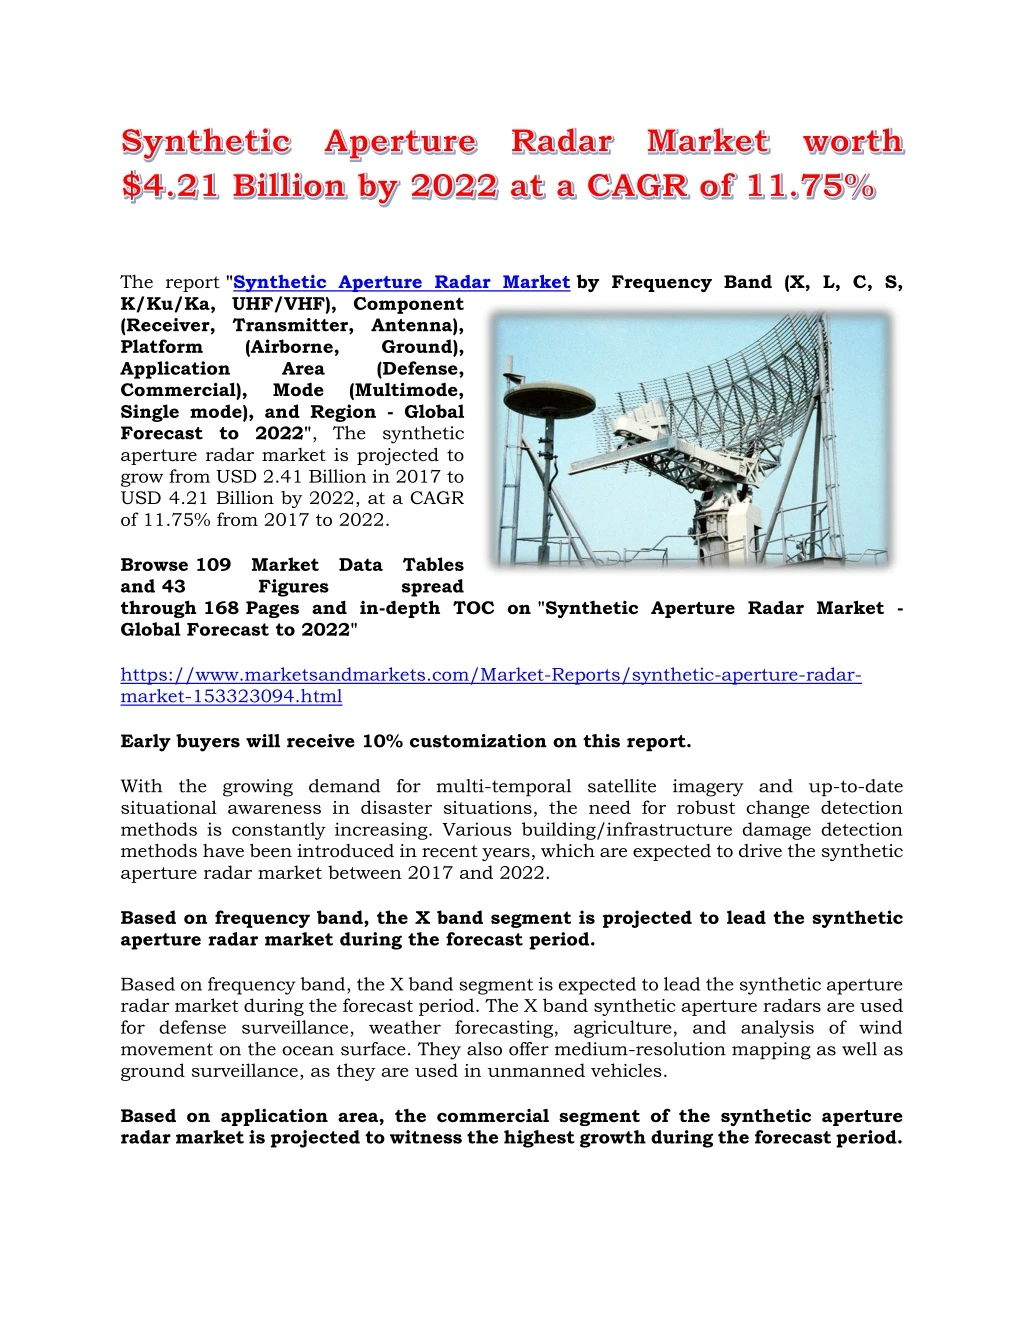 the report synthetic aperture radar market